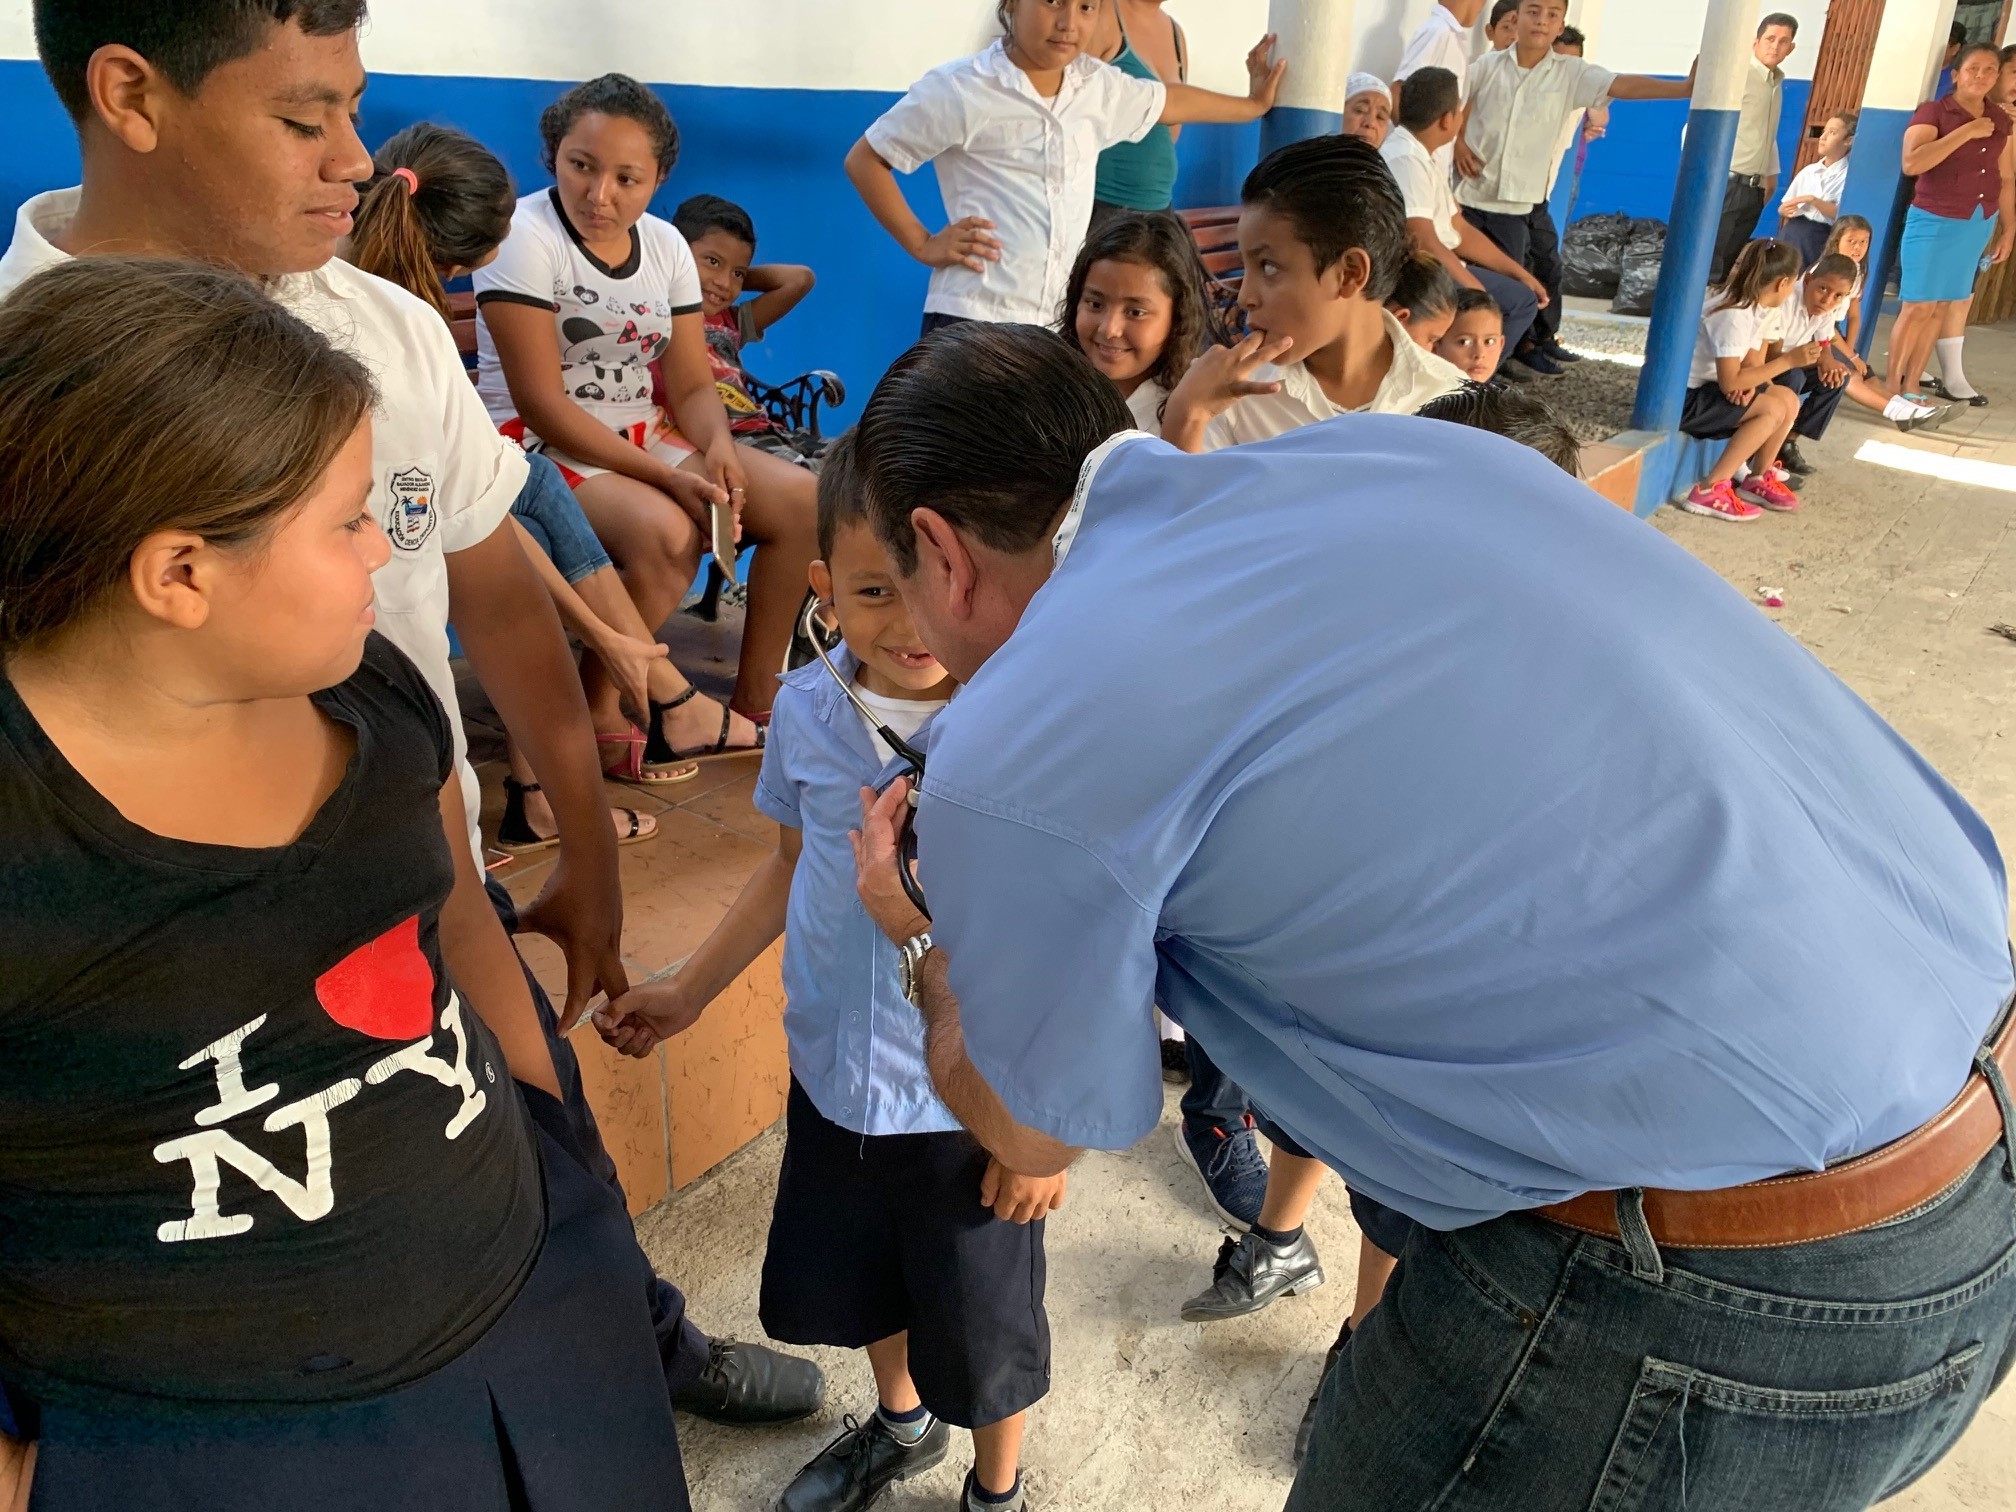 Carlos Araujo delivers medical treatment to one of the children in El Salvador